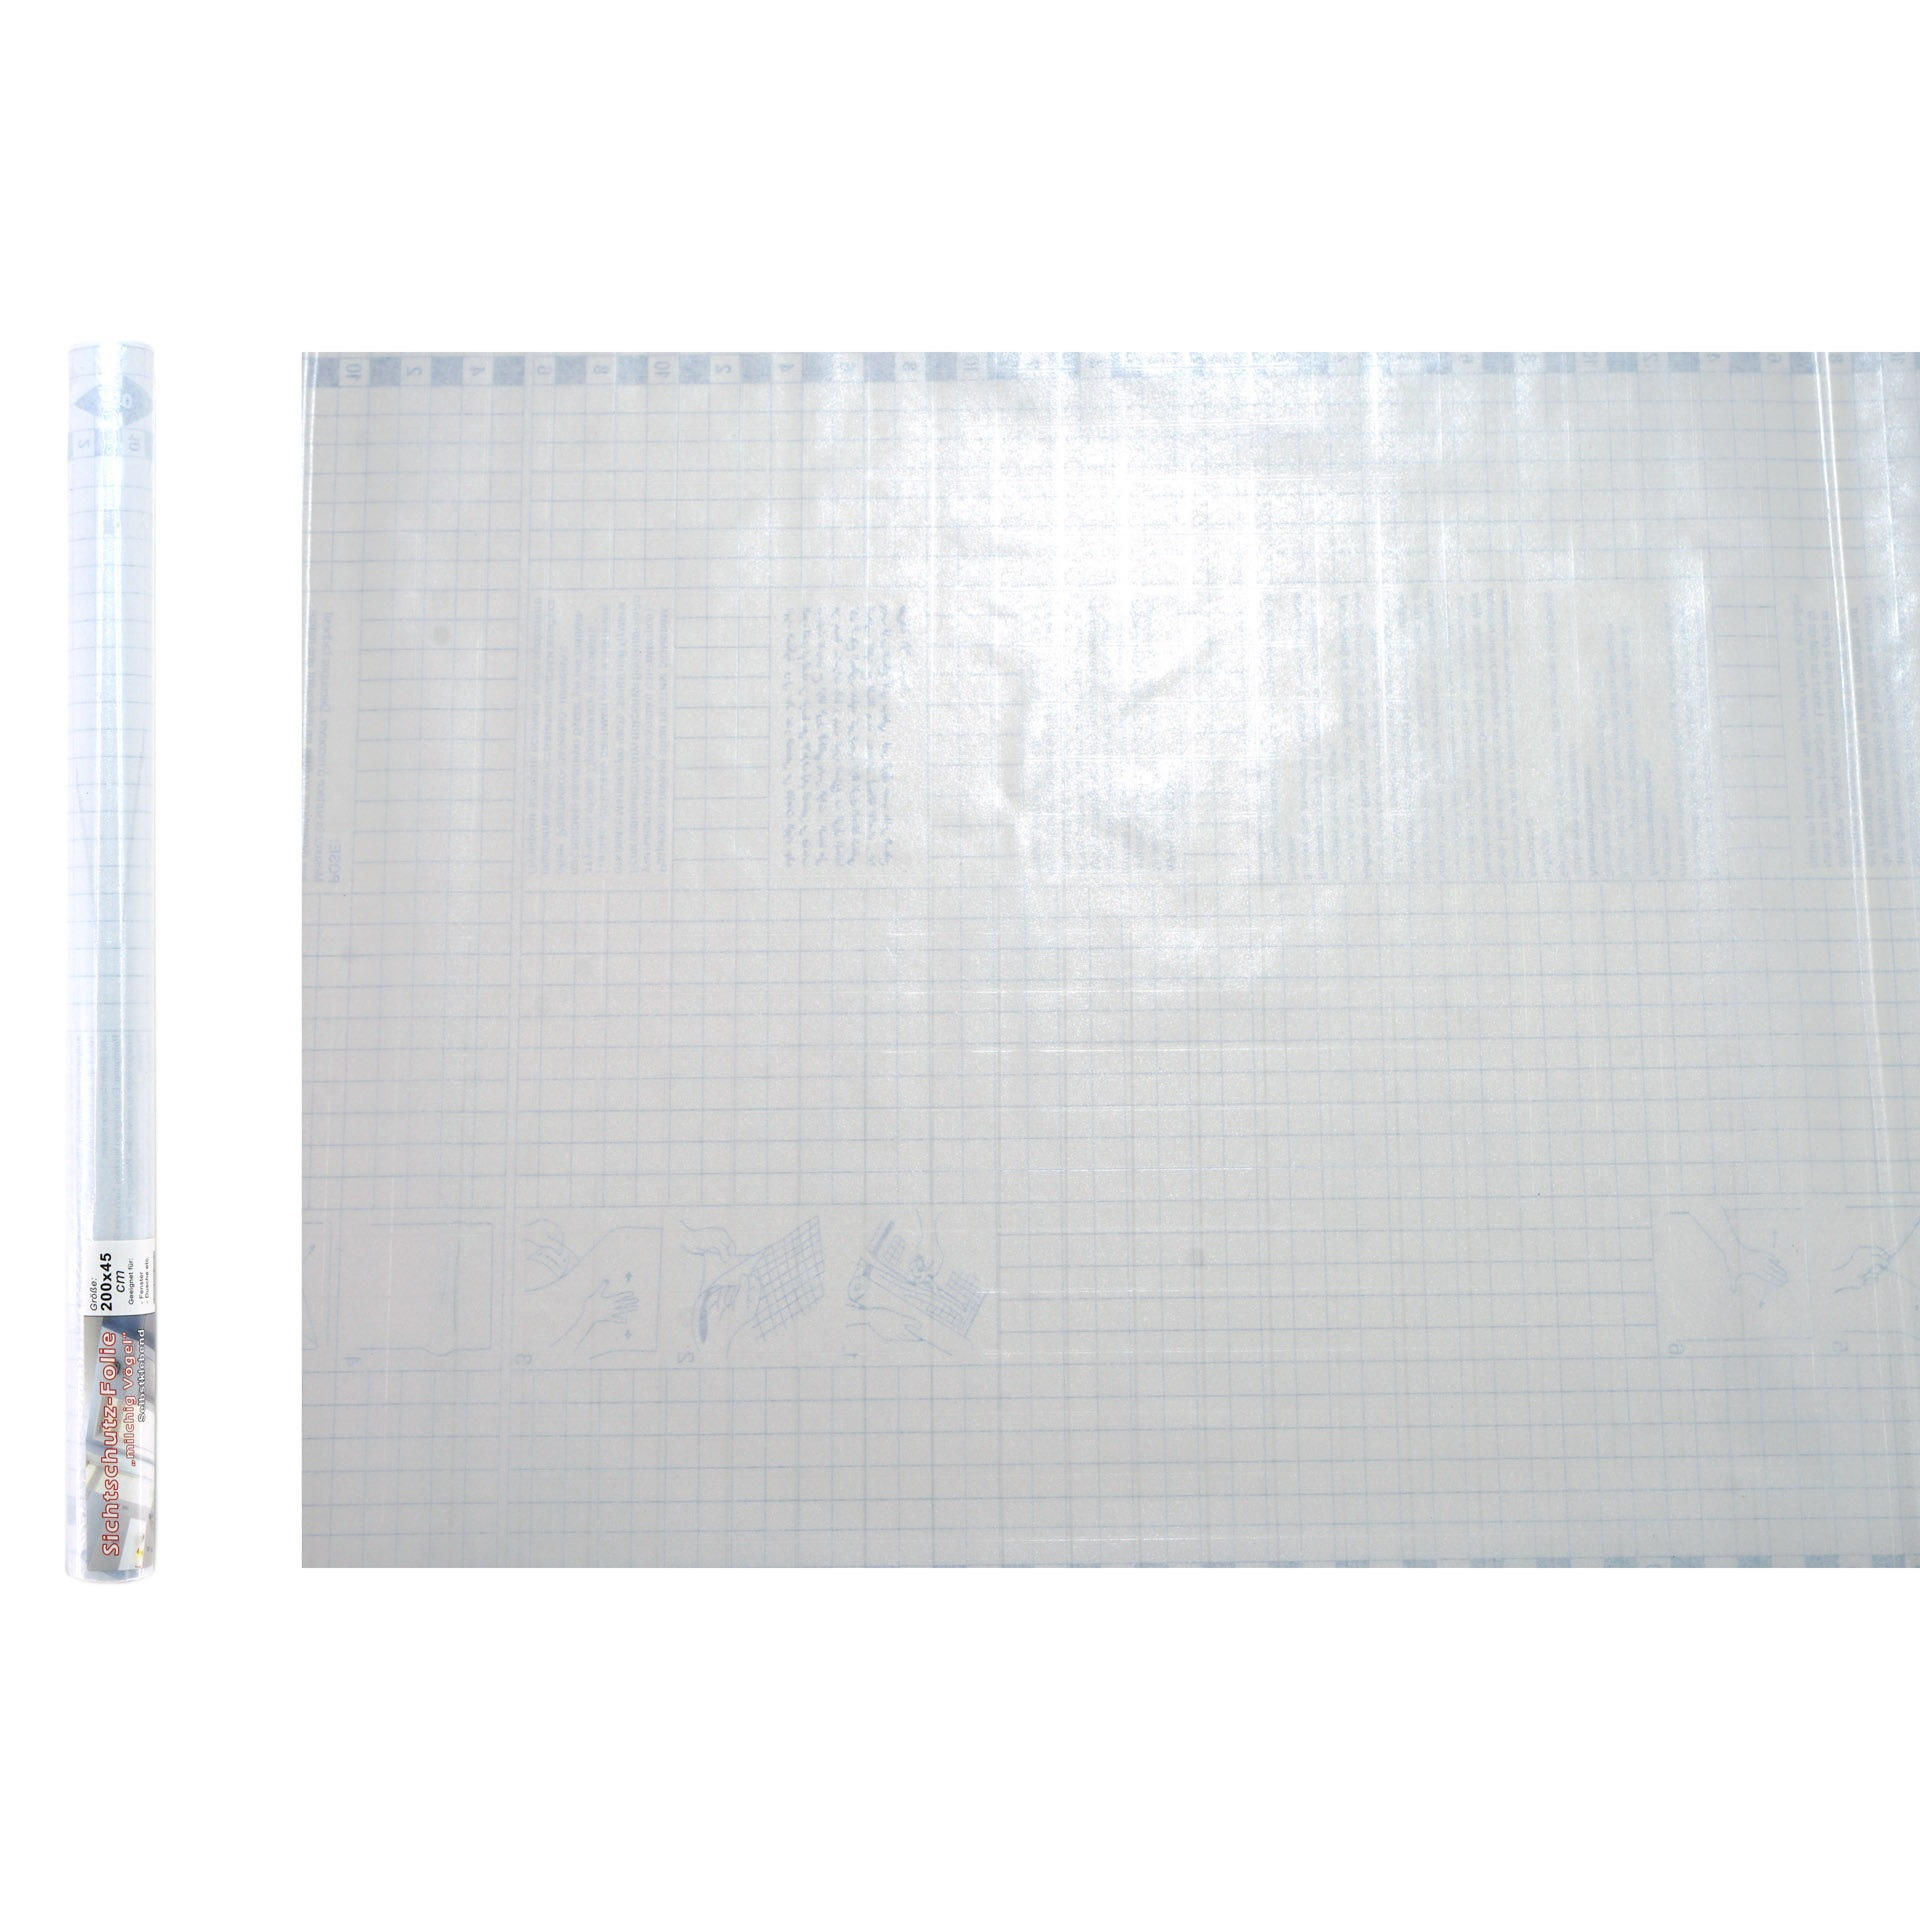 Merkloos Privacy raamfolie - 45 cm x 2 - melkglas vierkantjes design - zelfklevend -